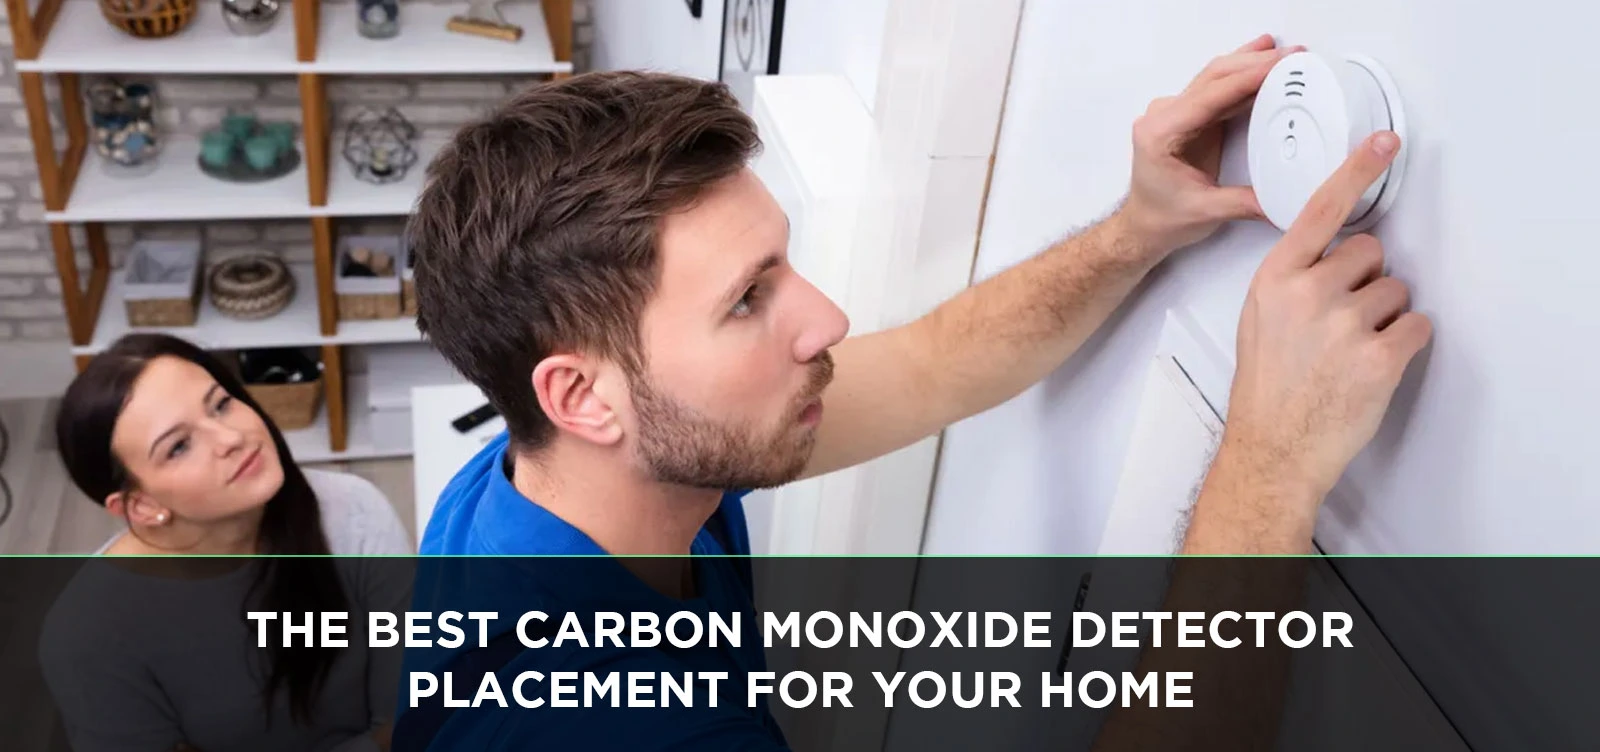 The Best Carbon Monoxide Detector Placement for Your Home